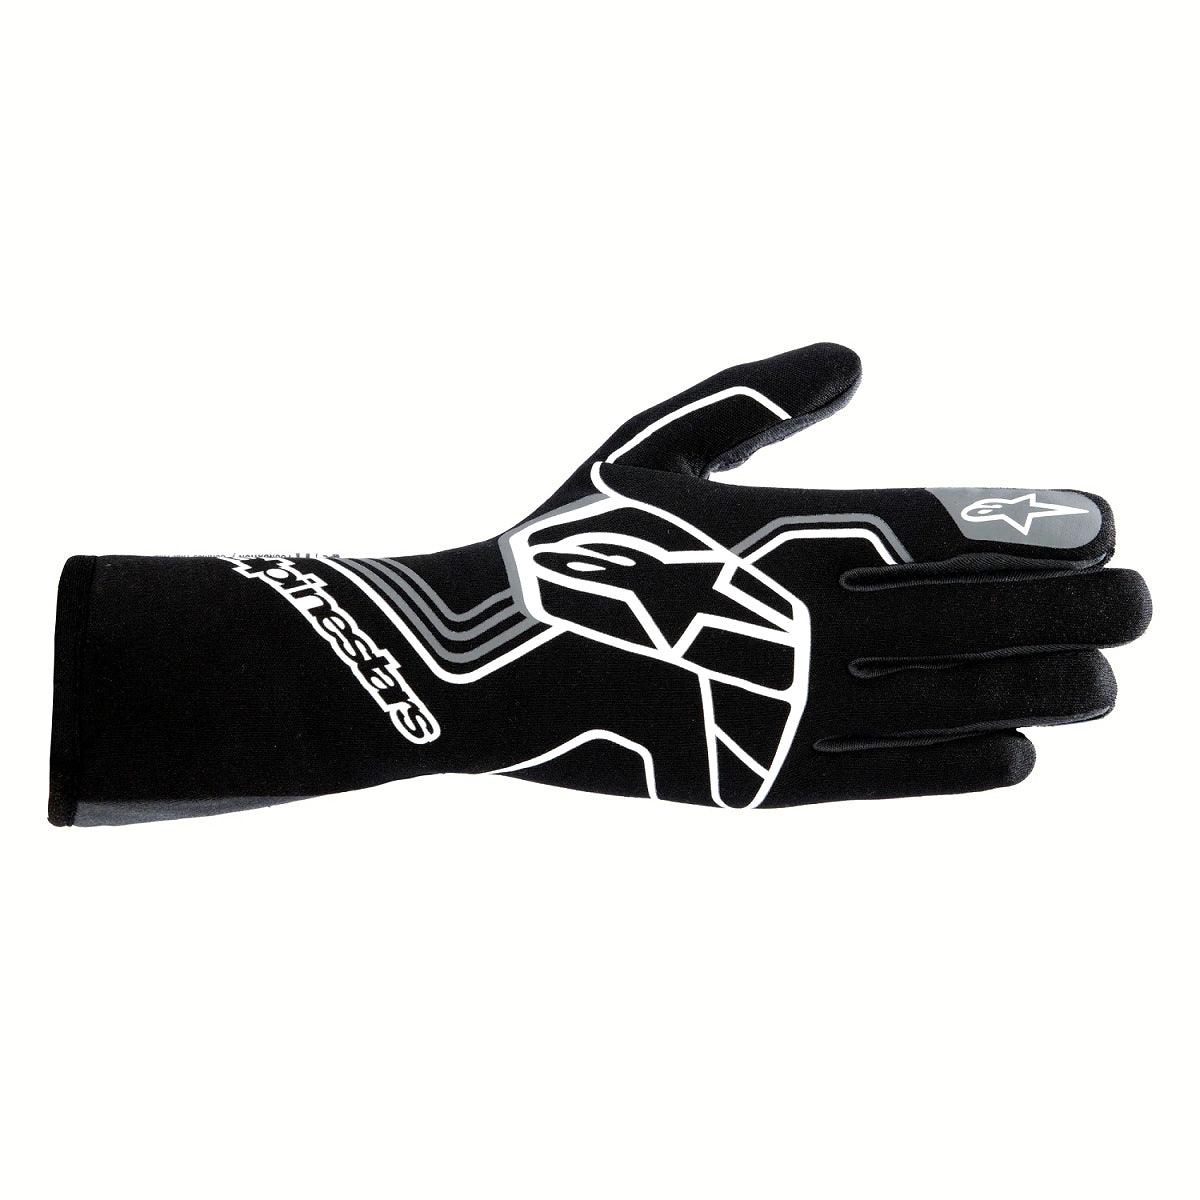 Glove Tech-1 Race V4 Black / Gray Large - Burlile Performance Products